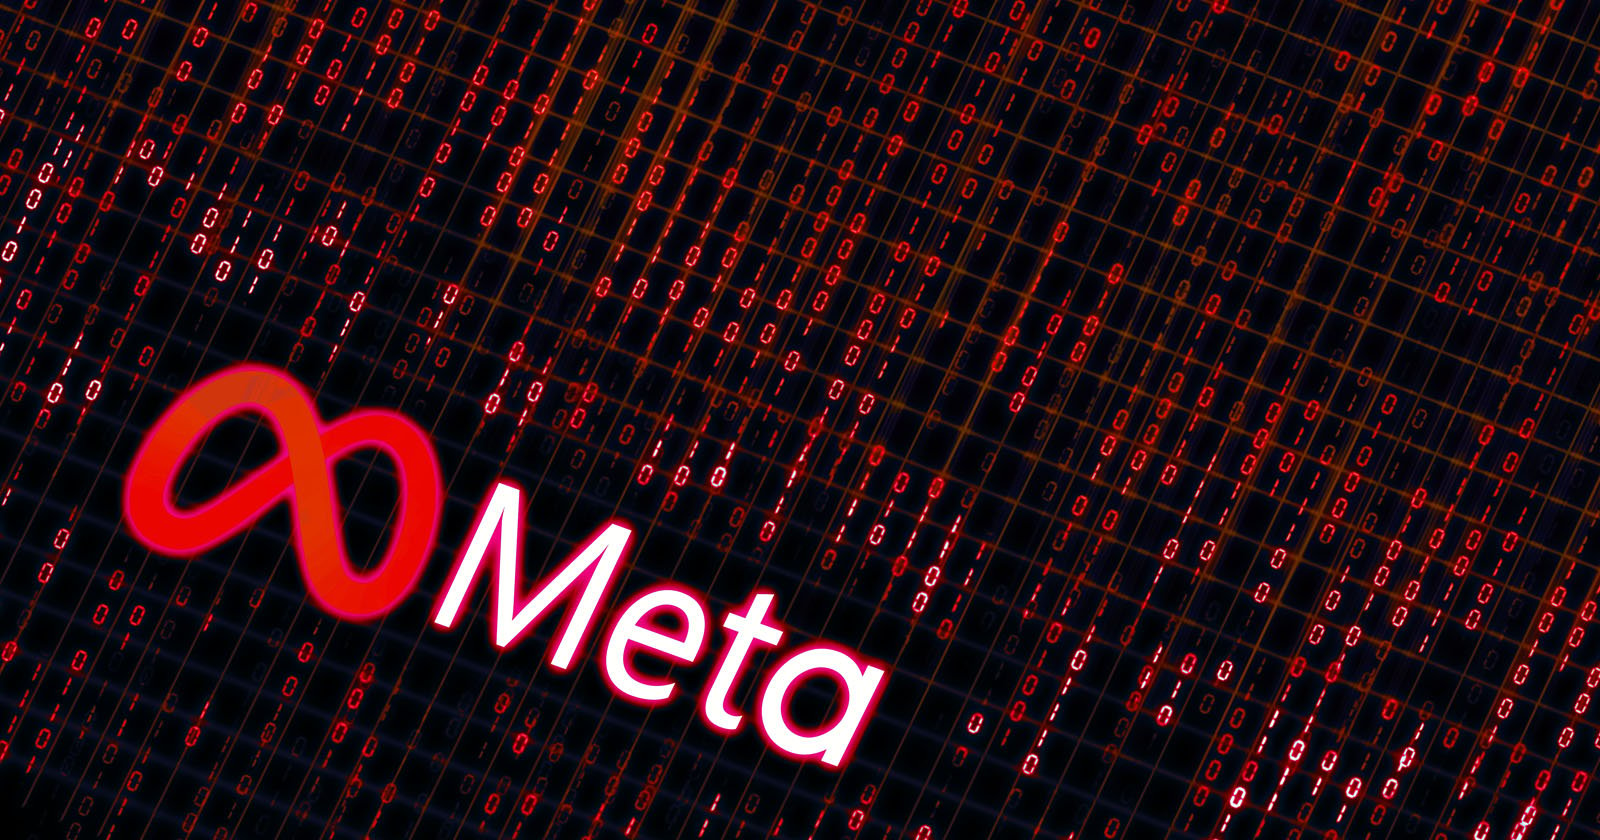 Metas Trusted Partner Program is Failing Miserably: Report